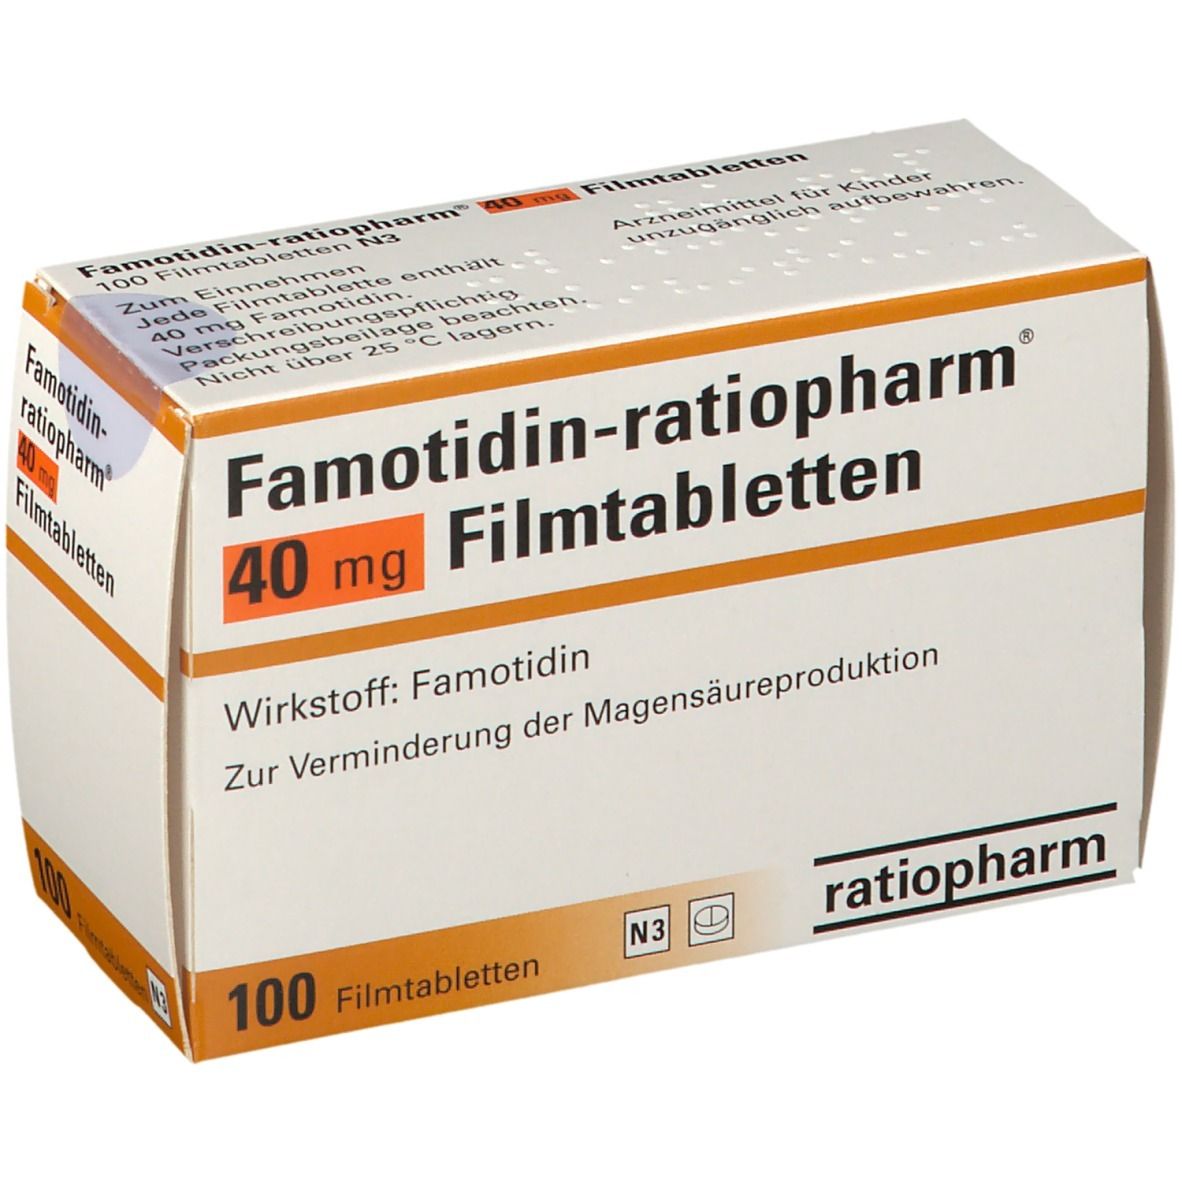 Famotidin-ratiopharm® 40 mg